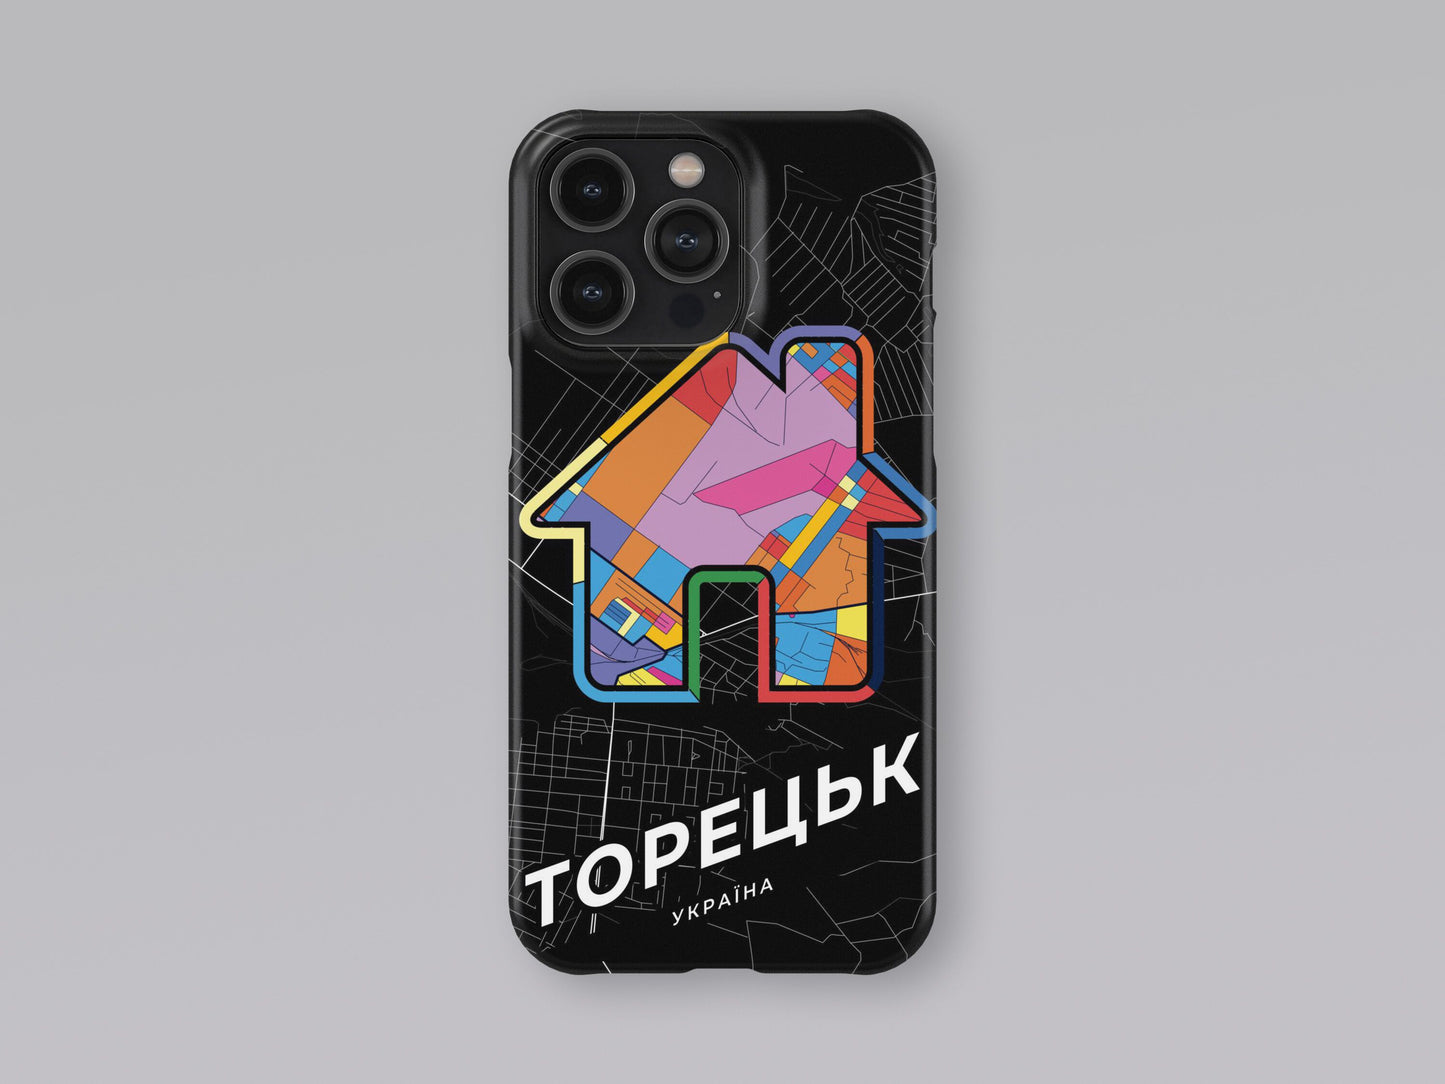 Toretsk Ukraine slim phone case with colorful icon 3